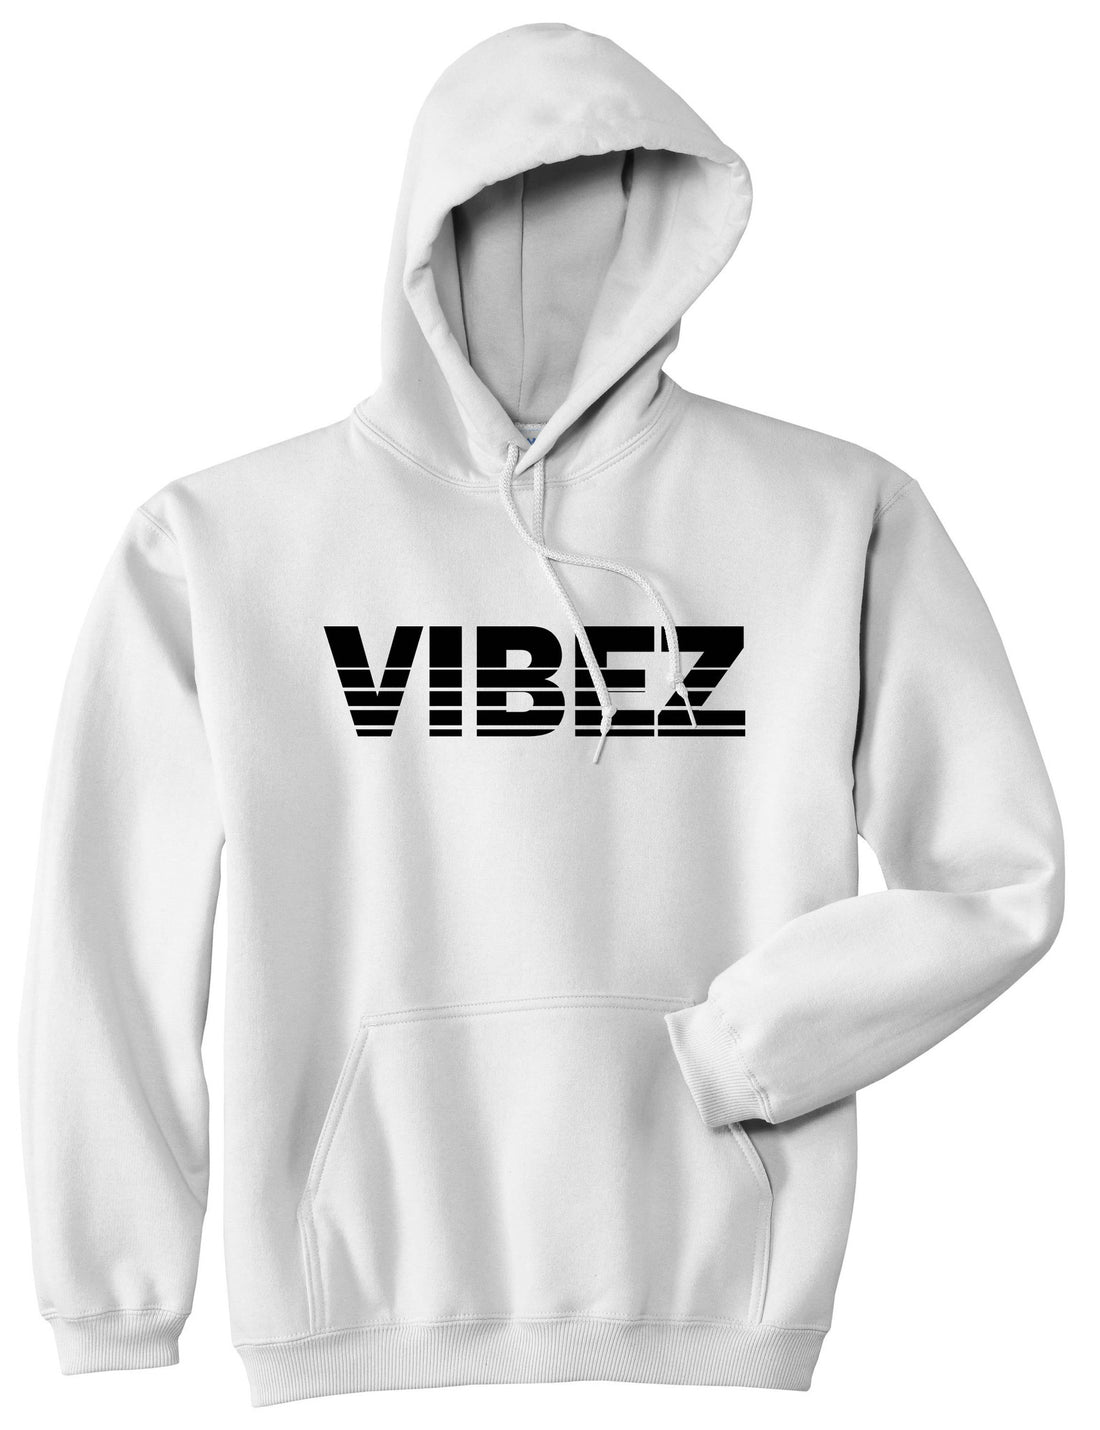 VIBEZ Racing Style Boys Kids Pullover Hoodie Hoody in White by Kings Of NY